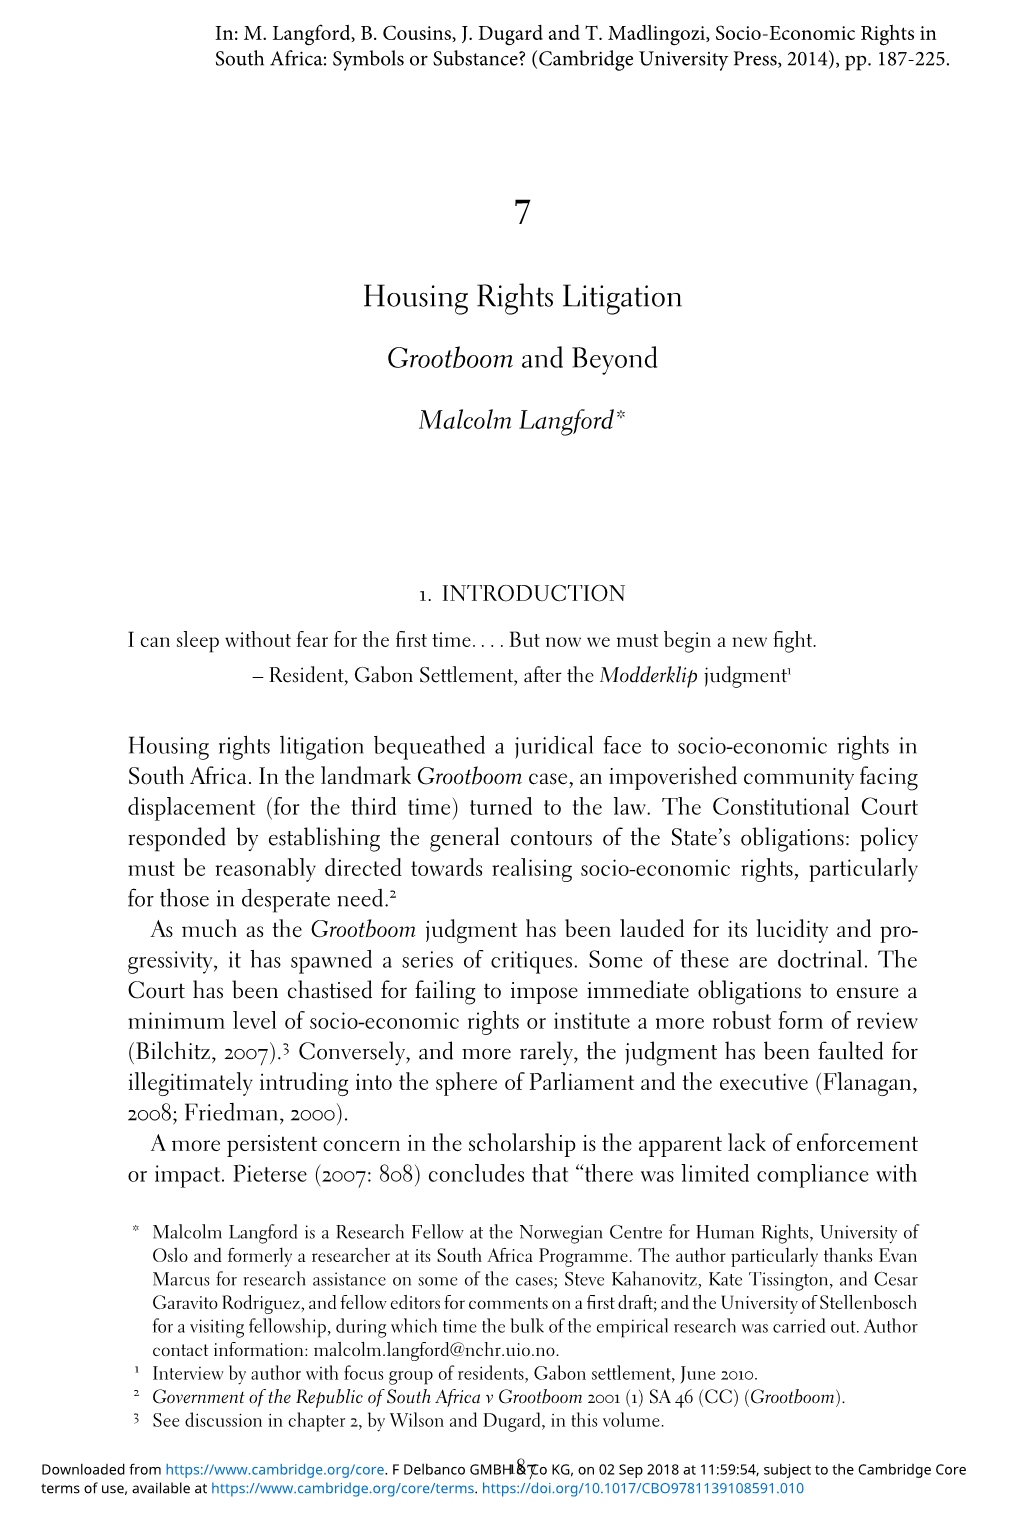 Housing Rights Litigation